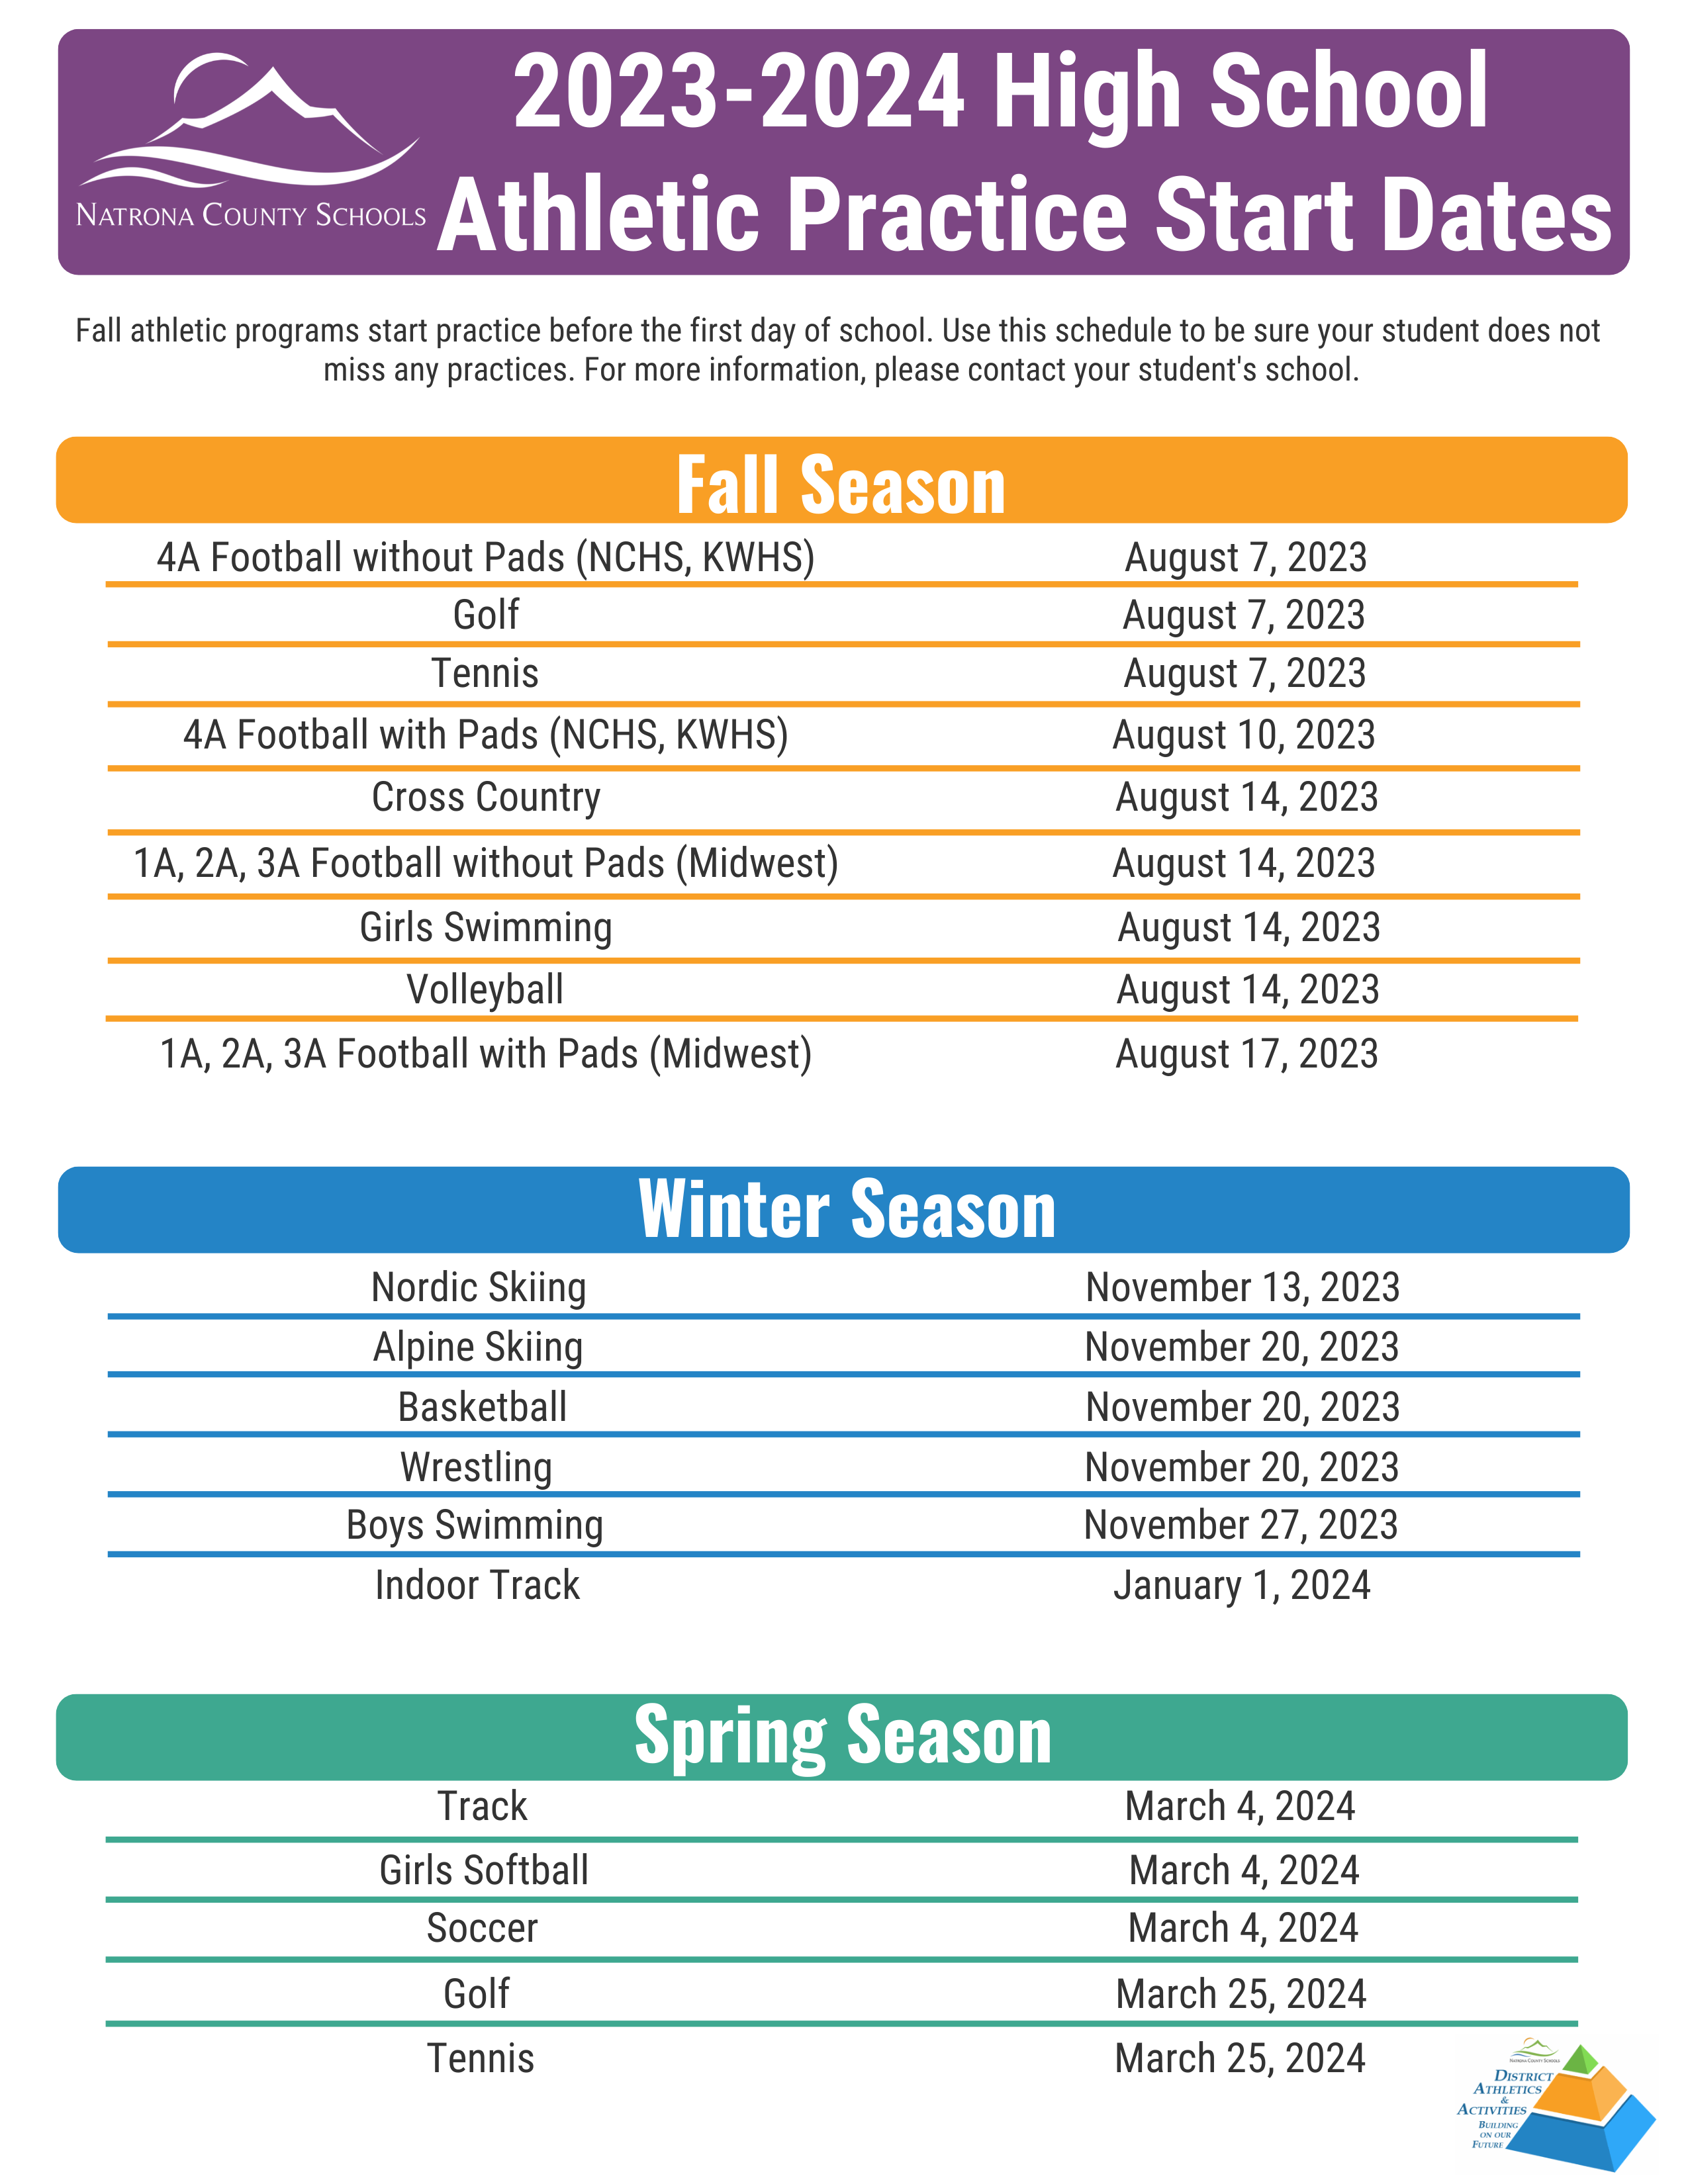 2023 - 2024 High School Athletic Practice Start Dates